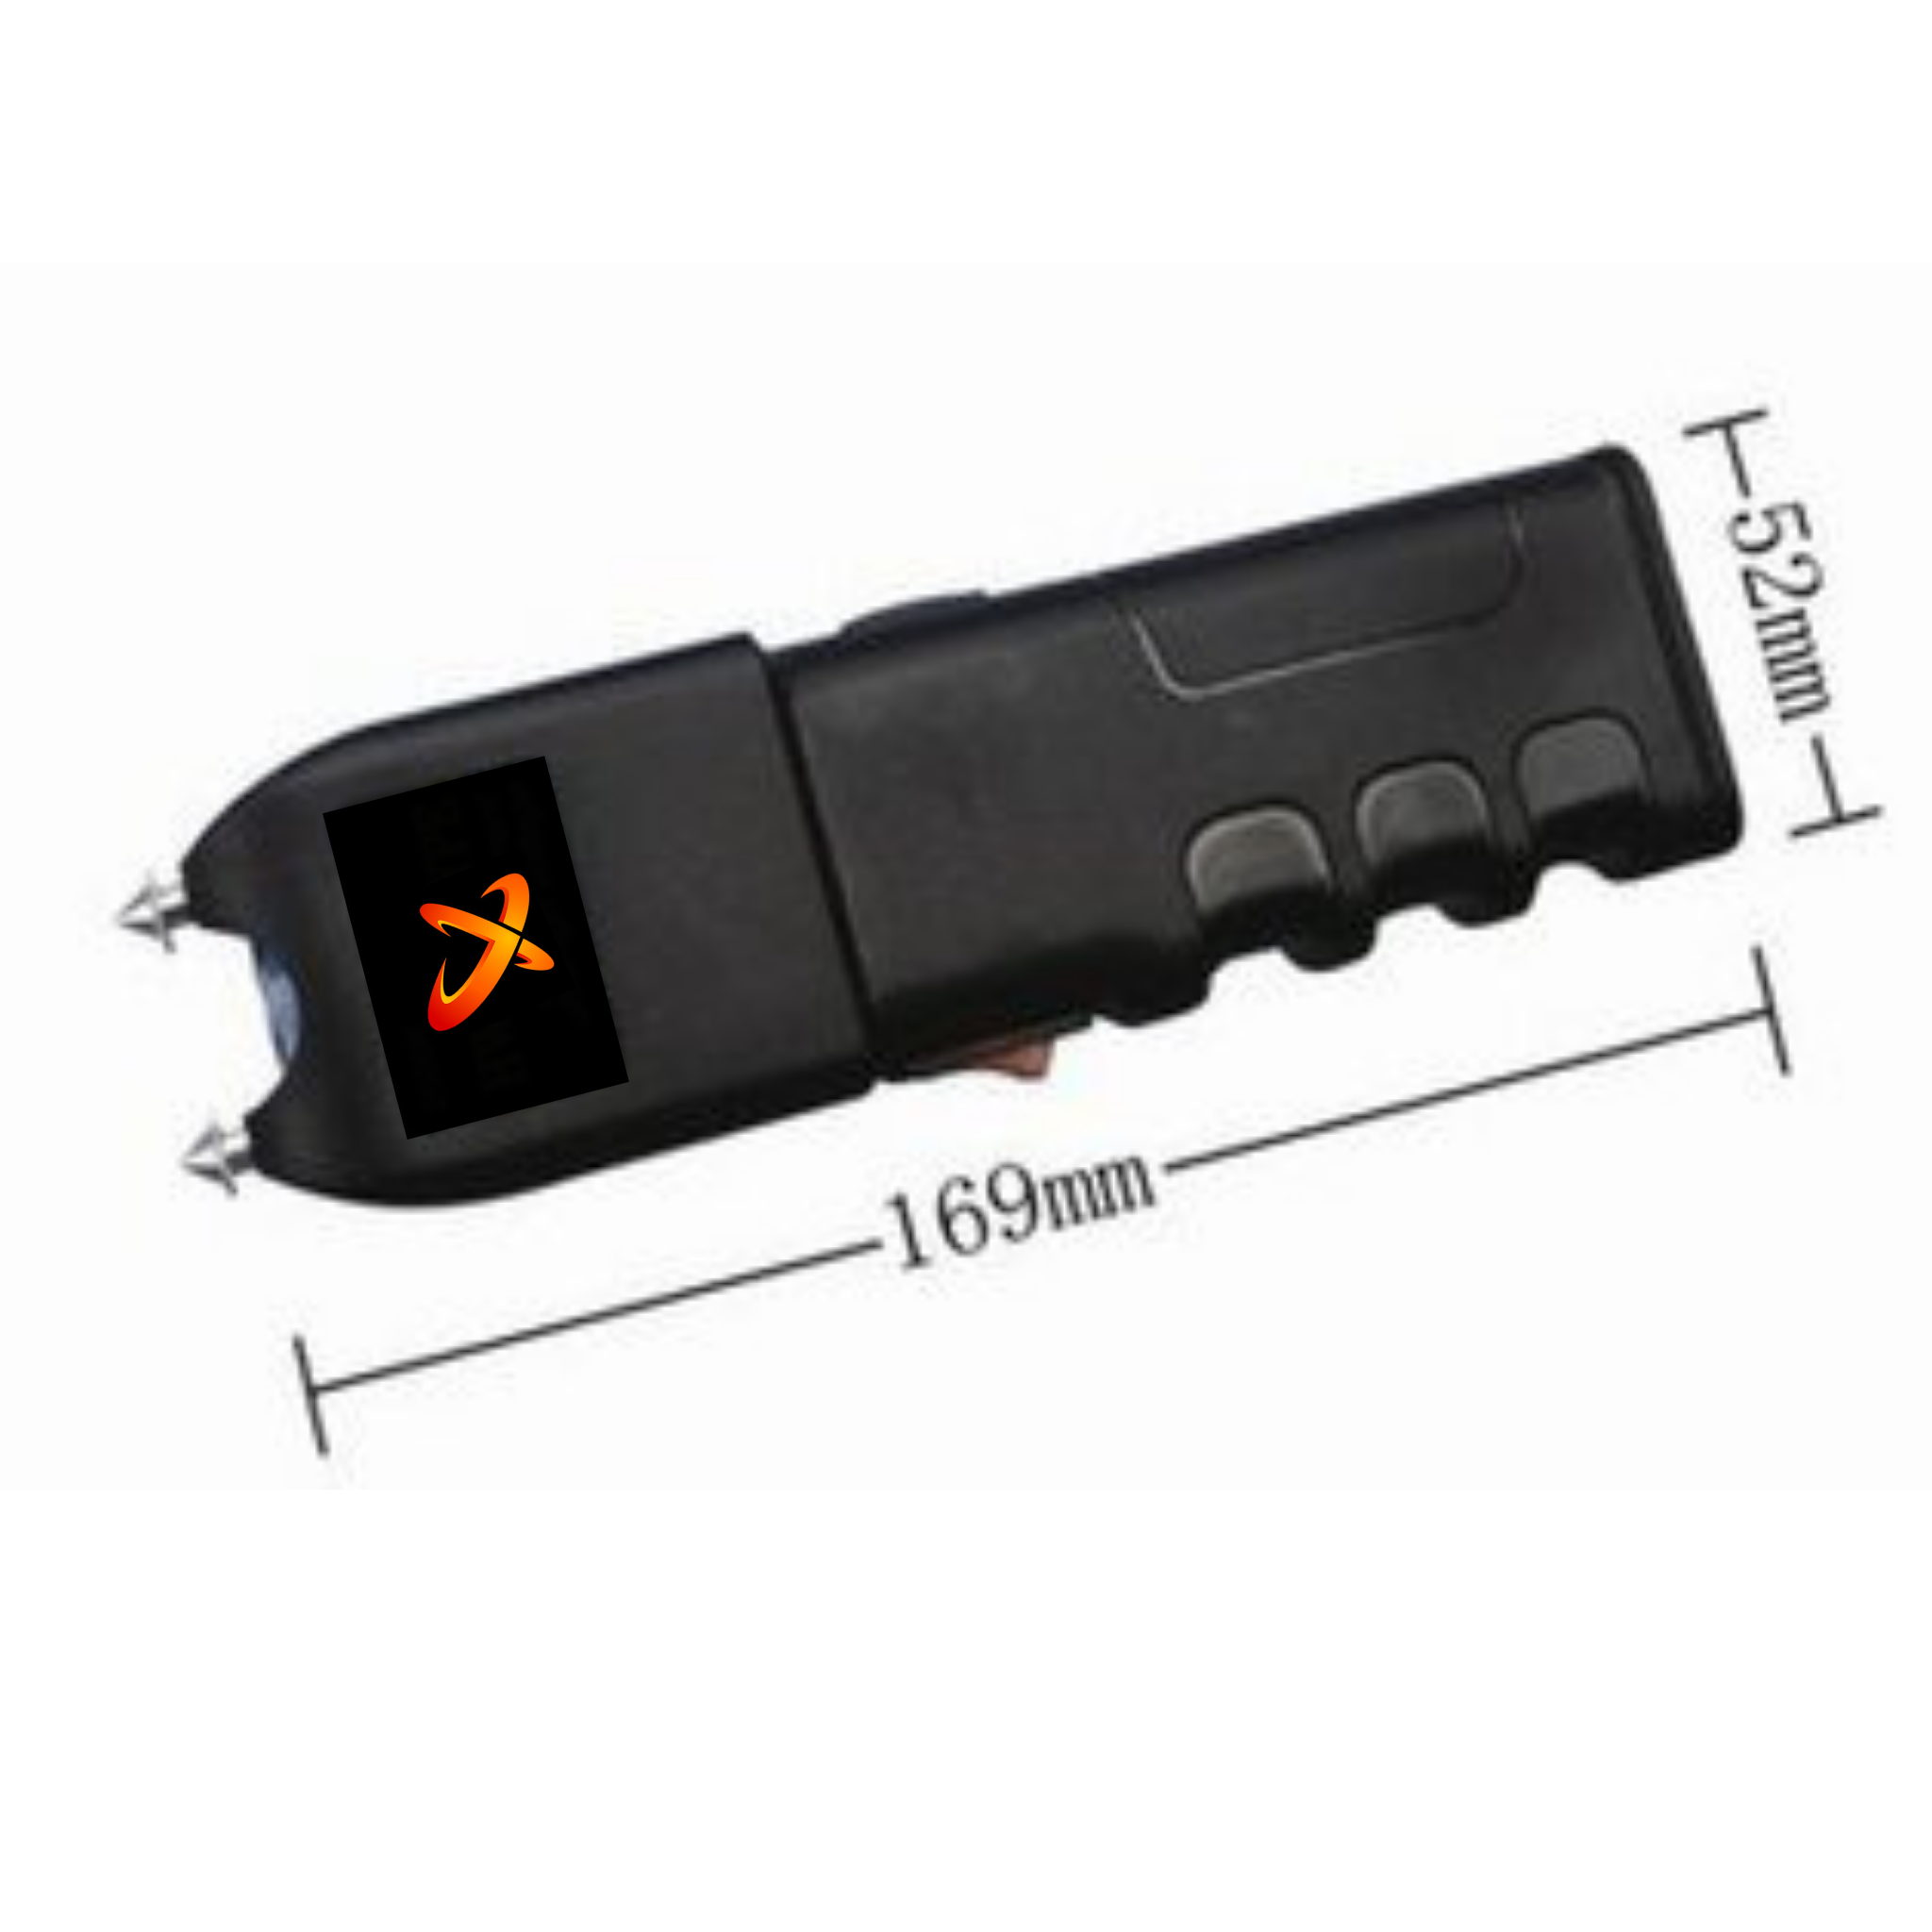 Buy Xboom E- Wave Stun gun with Flashlight Online at Best Prices